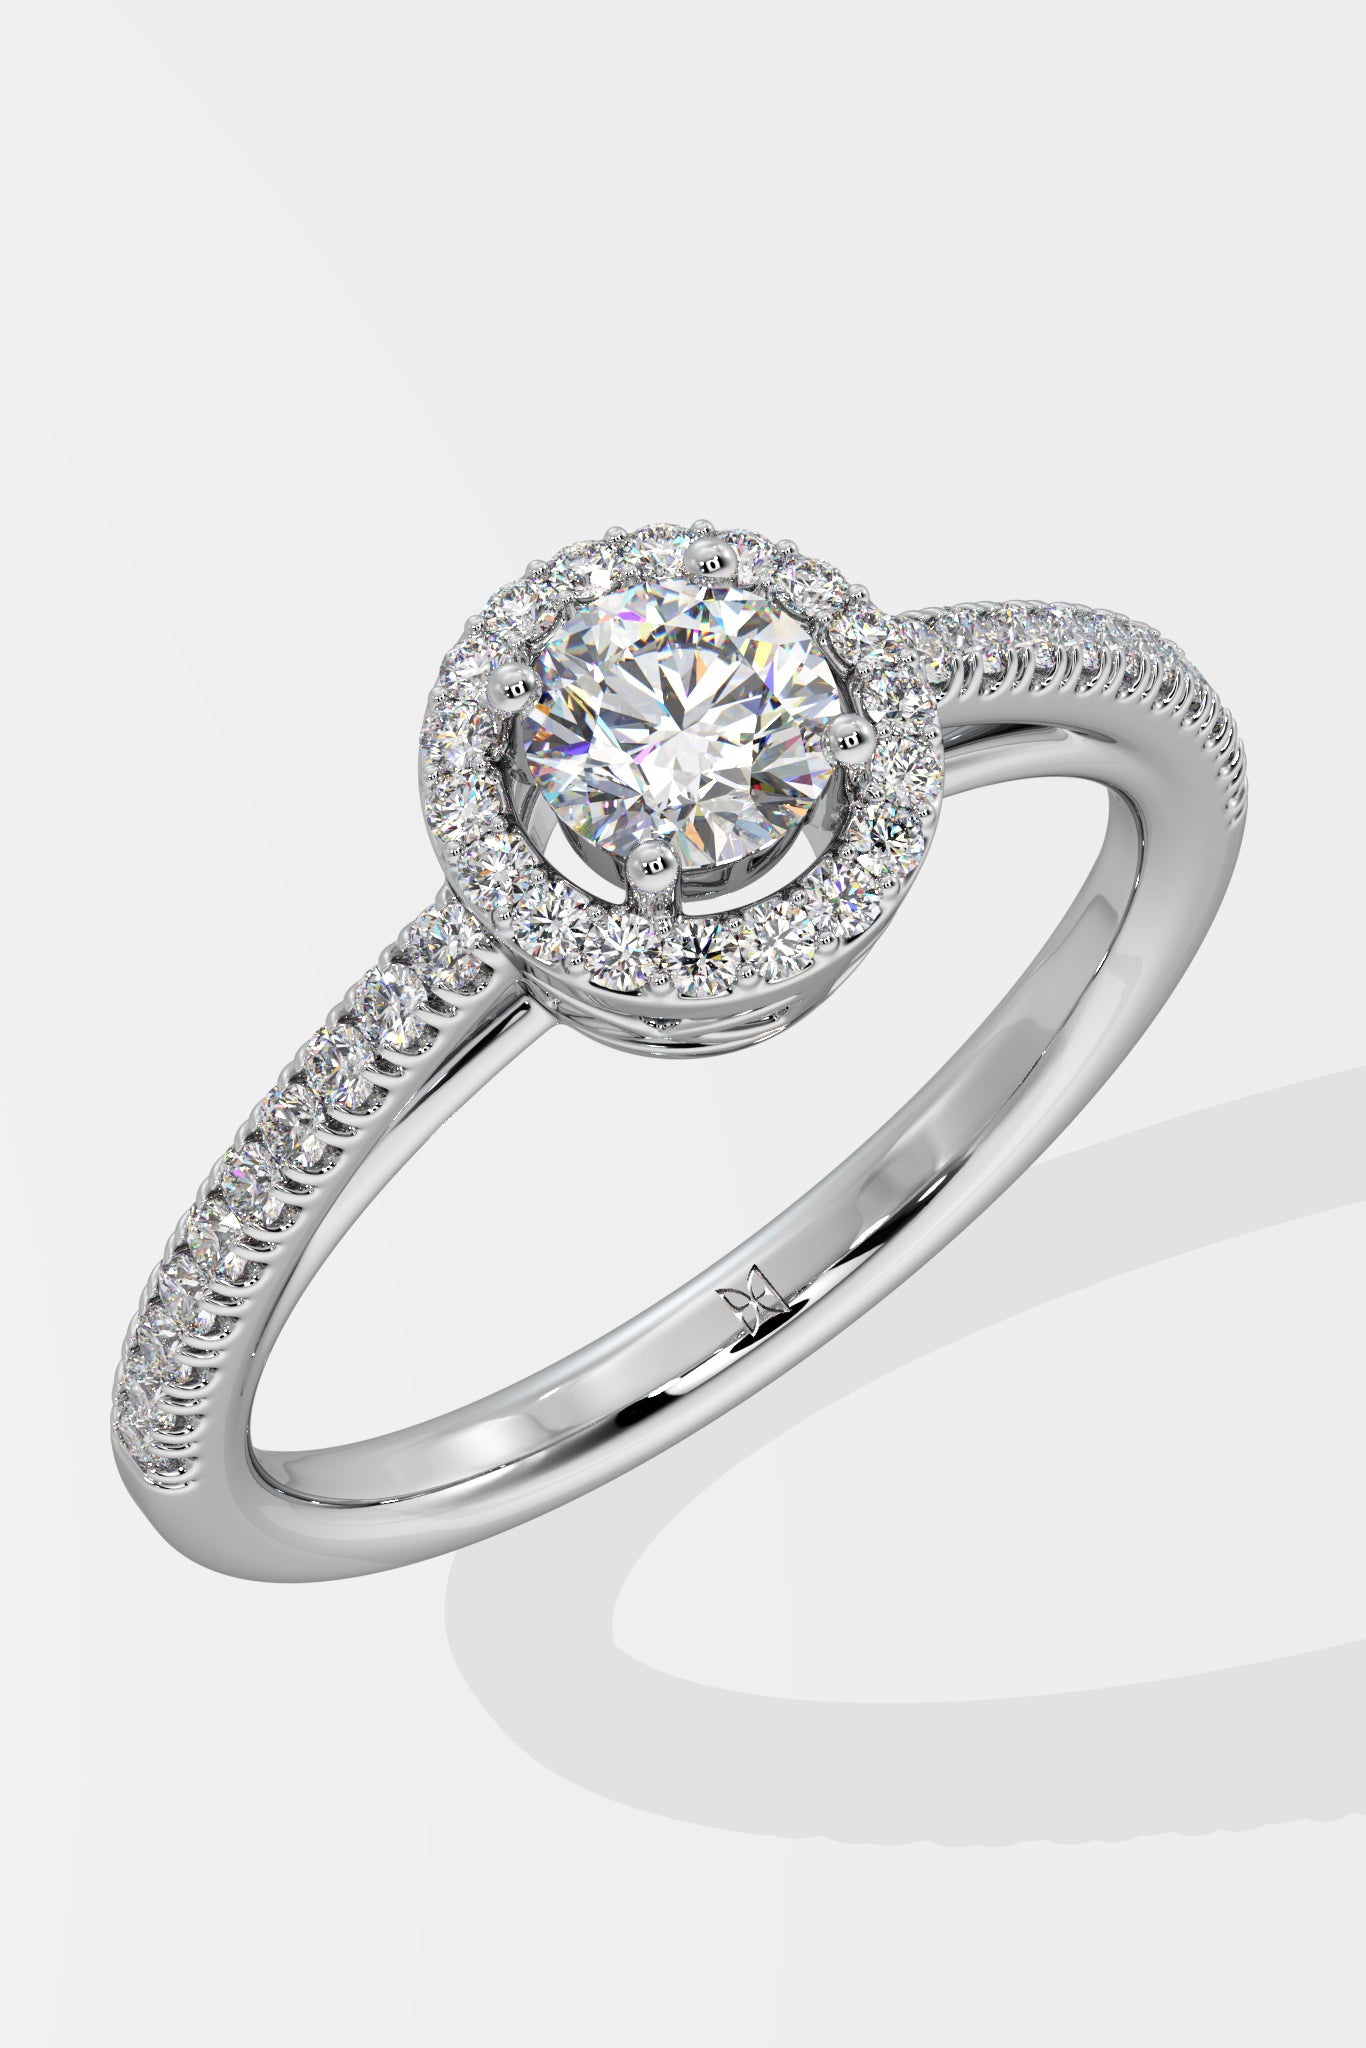 3 Carat Lab Created Emerald Diamond Custom Gold Solitaire Engagement Ring